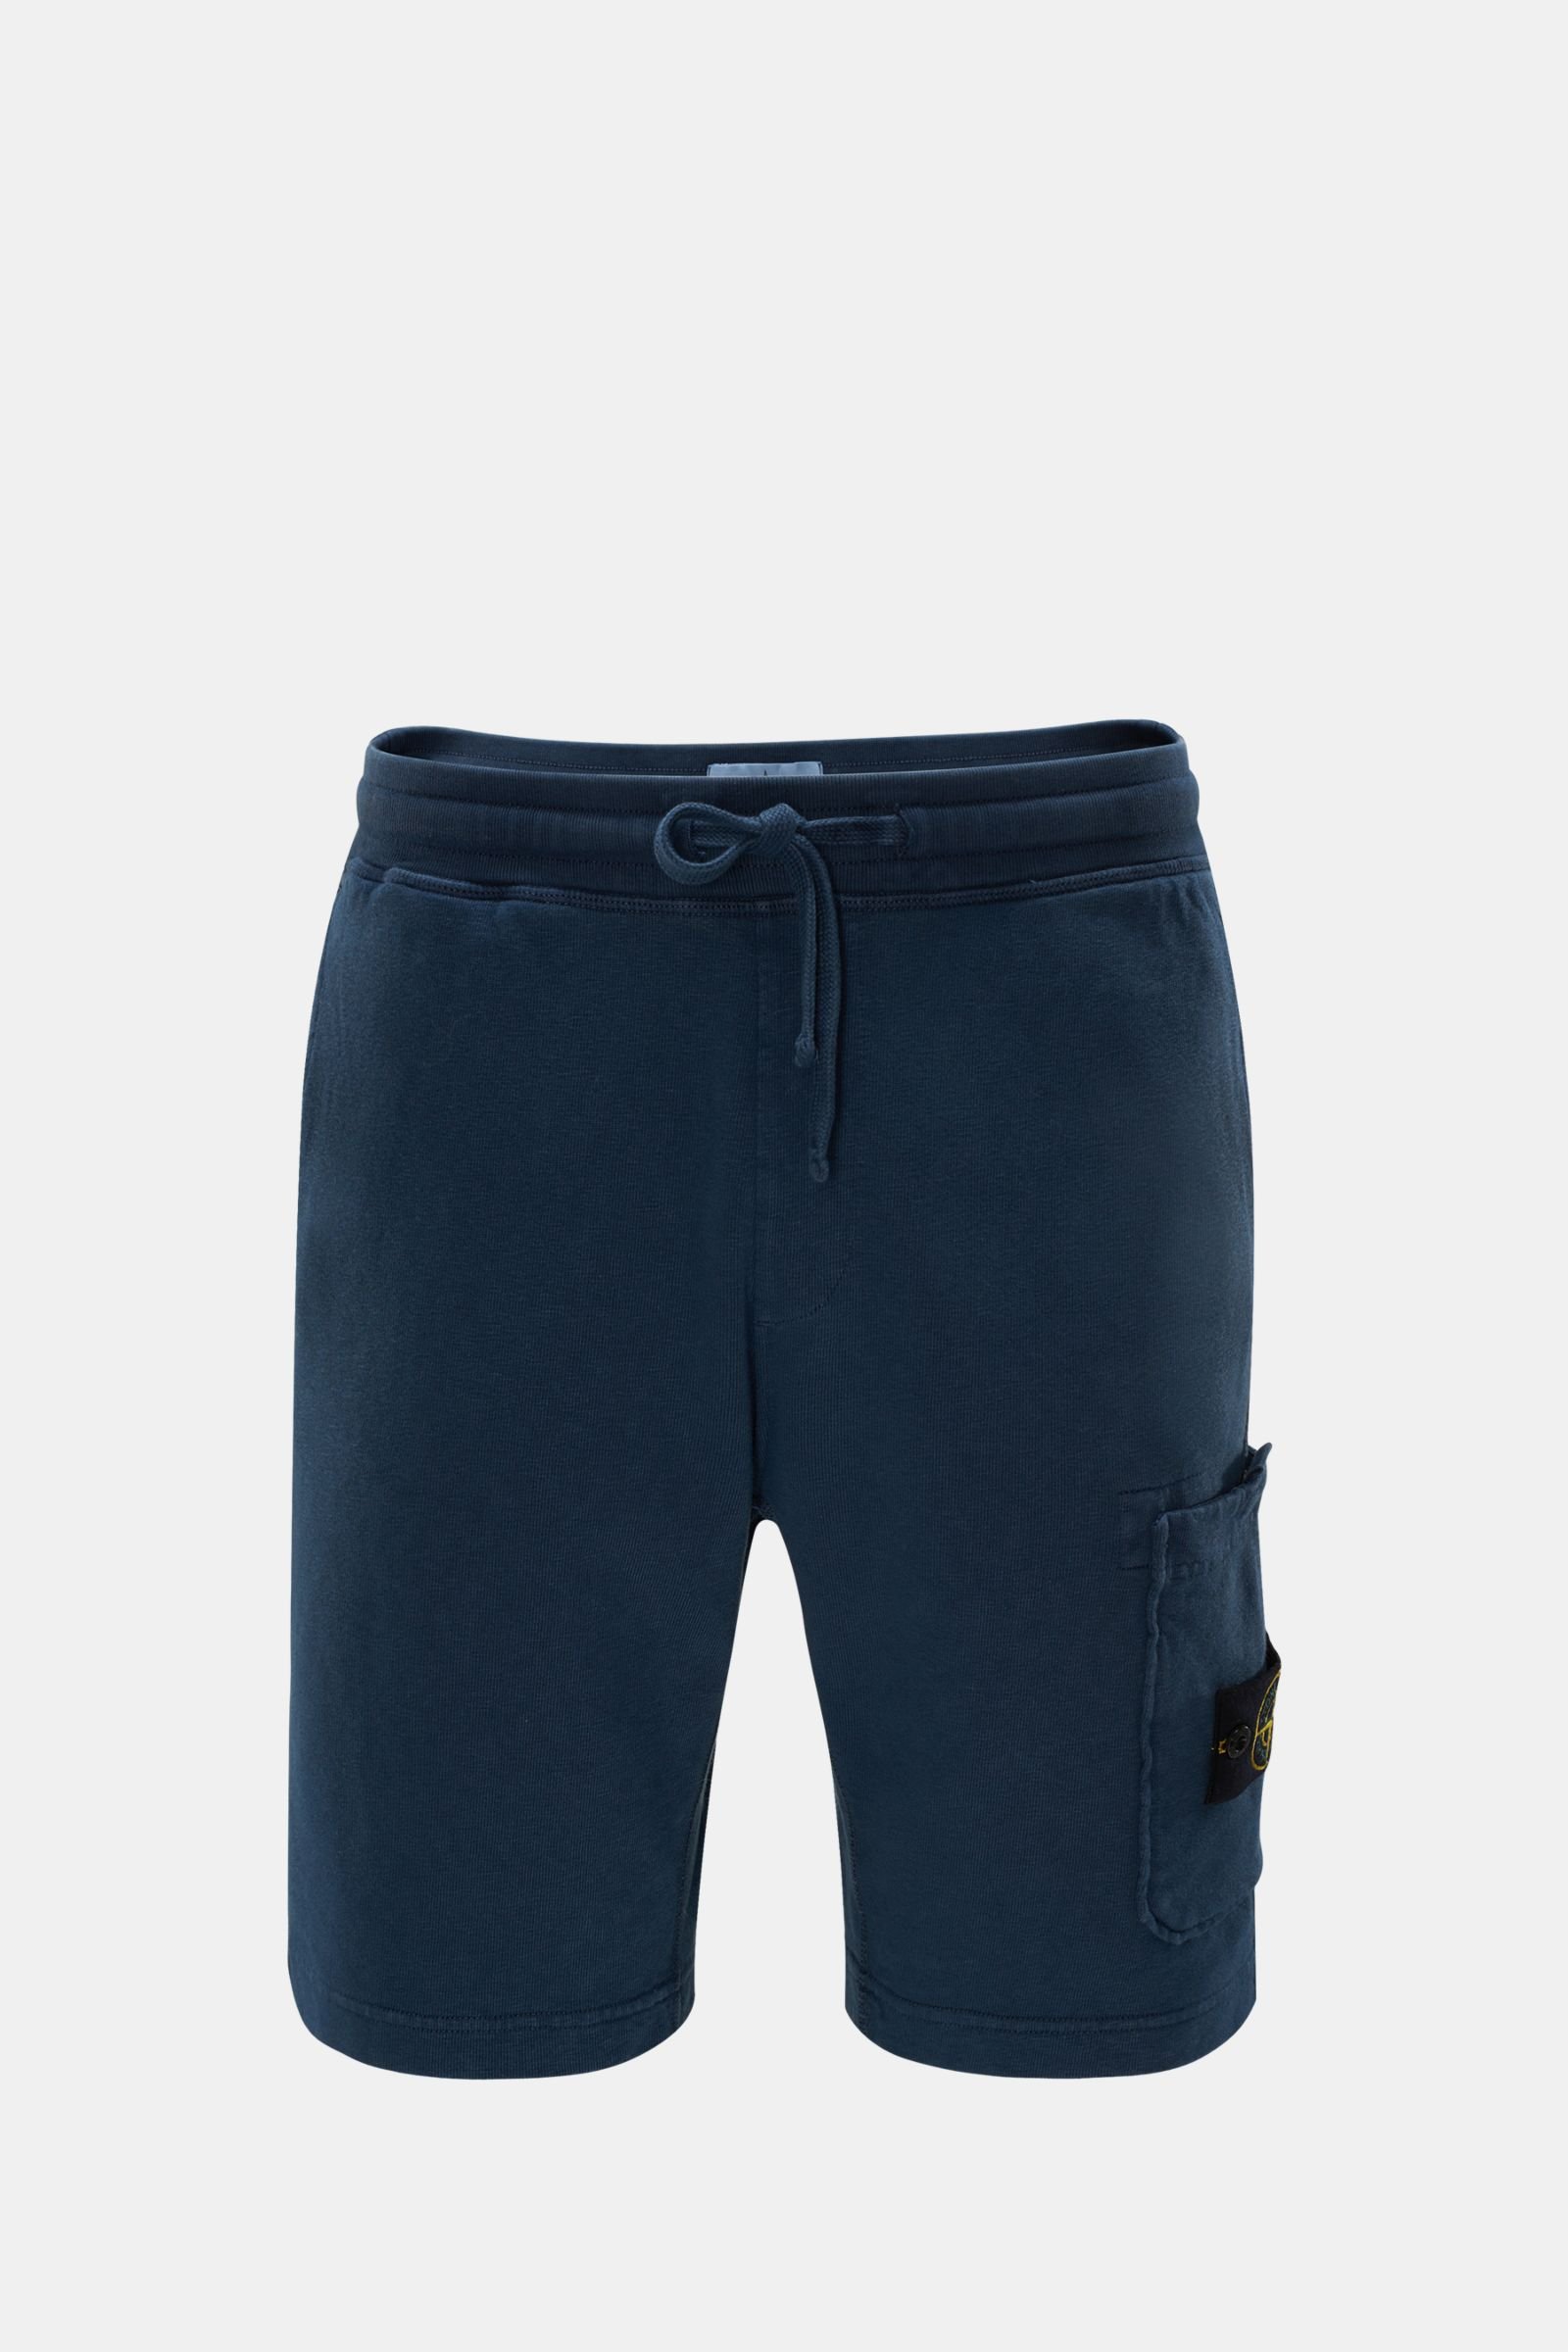 Cargo sweat shorts grey-blue